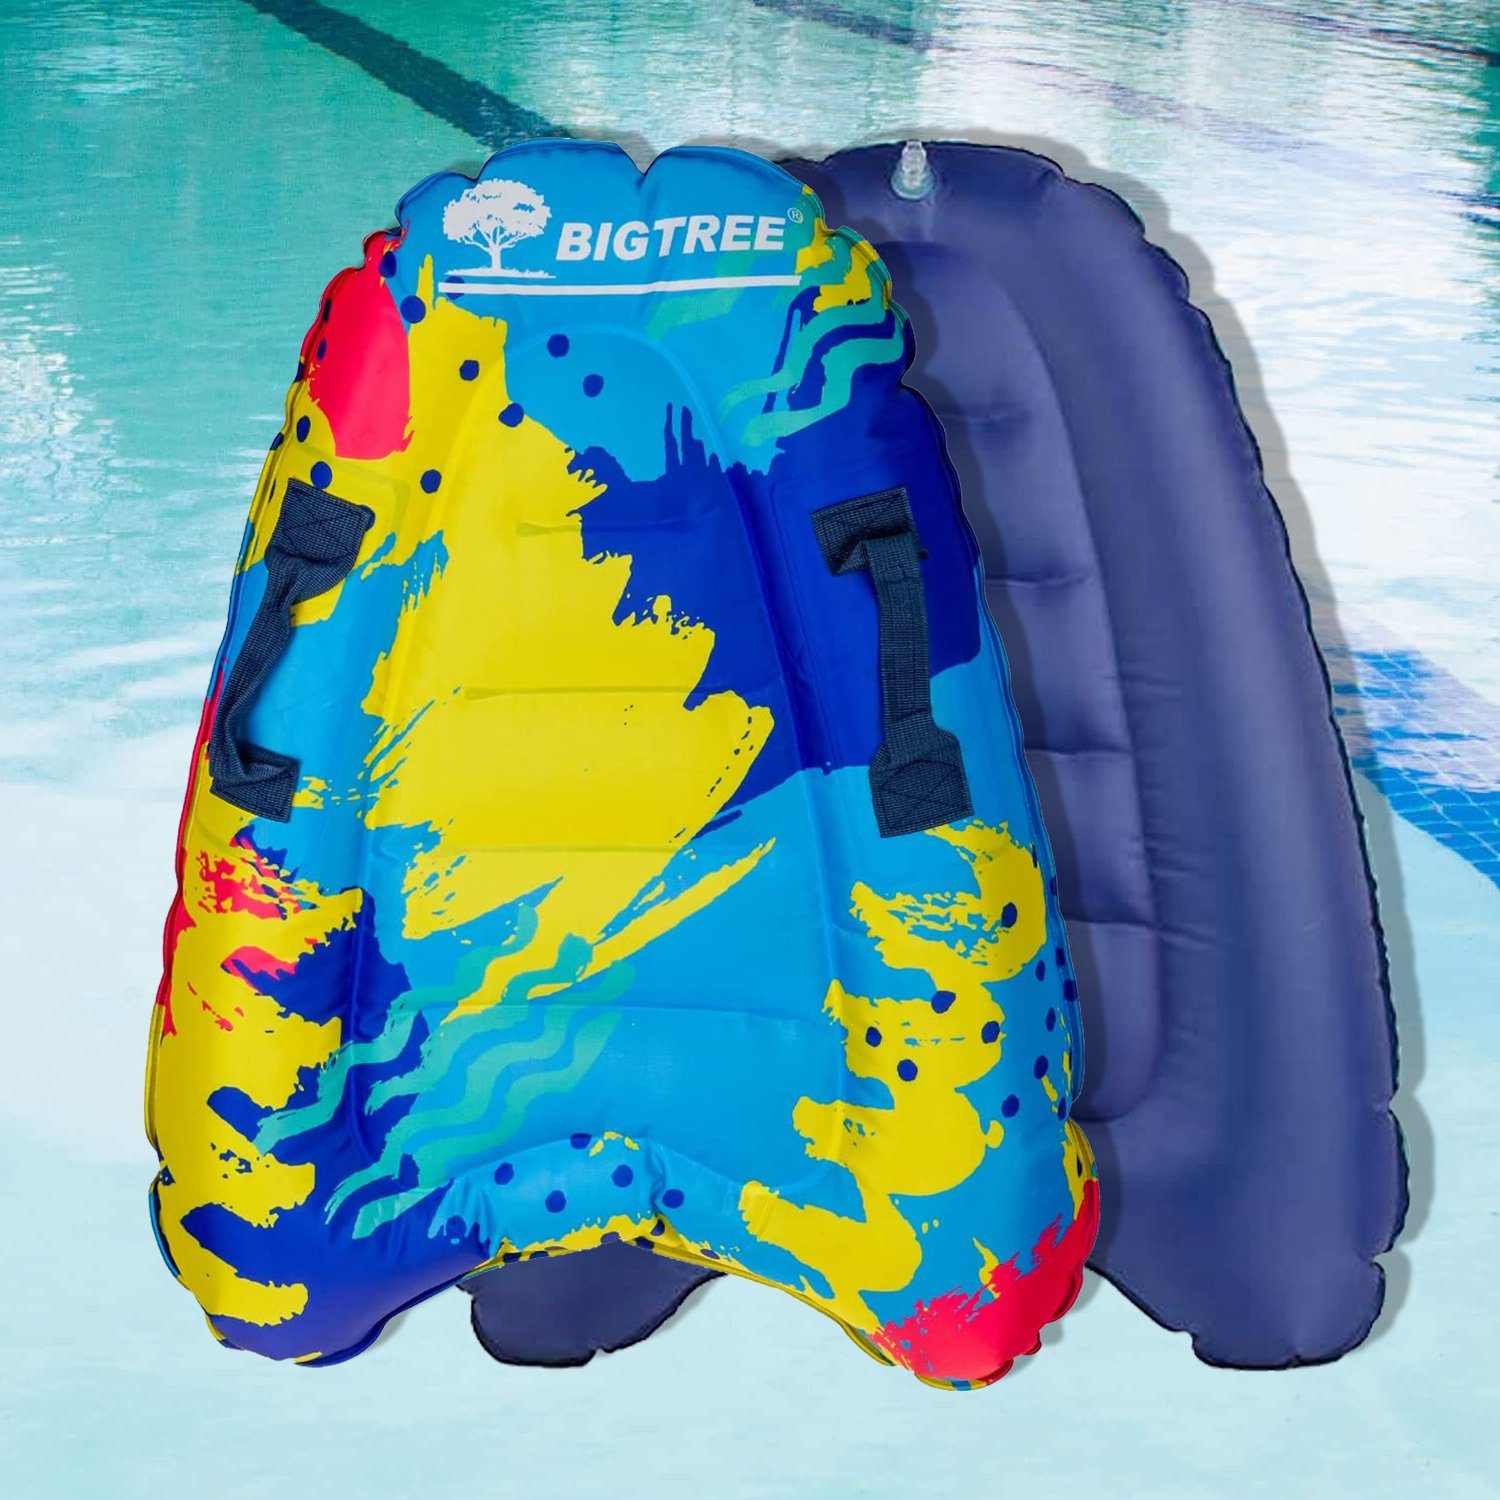 KAHOO Inflatable SUP-Board Aufblasbares Bodyboard, 52x14x70cm, Schwimmhilfe Bunt